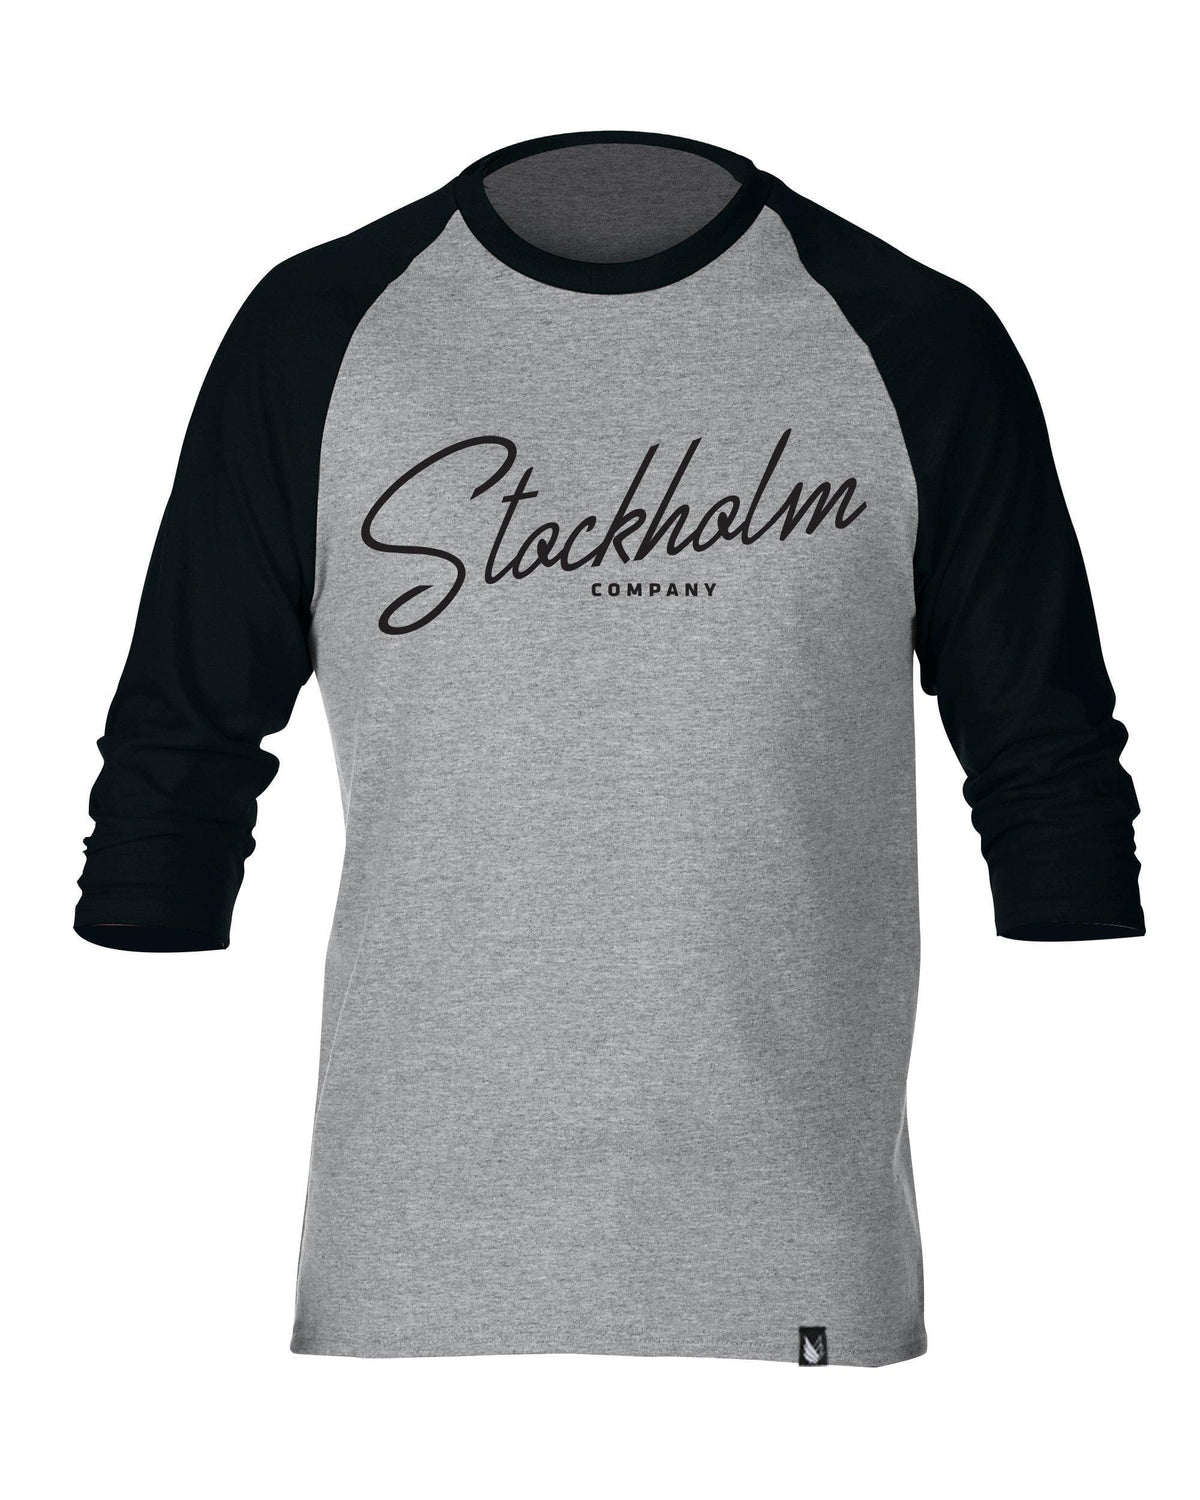 Stockholm cursiva - Raglan 3/4 beisbolera | Playera | Beisbolera, hombre, stkm originals, unisex | Stockholm Company